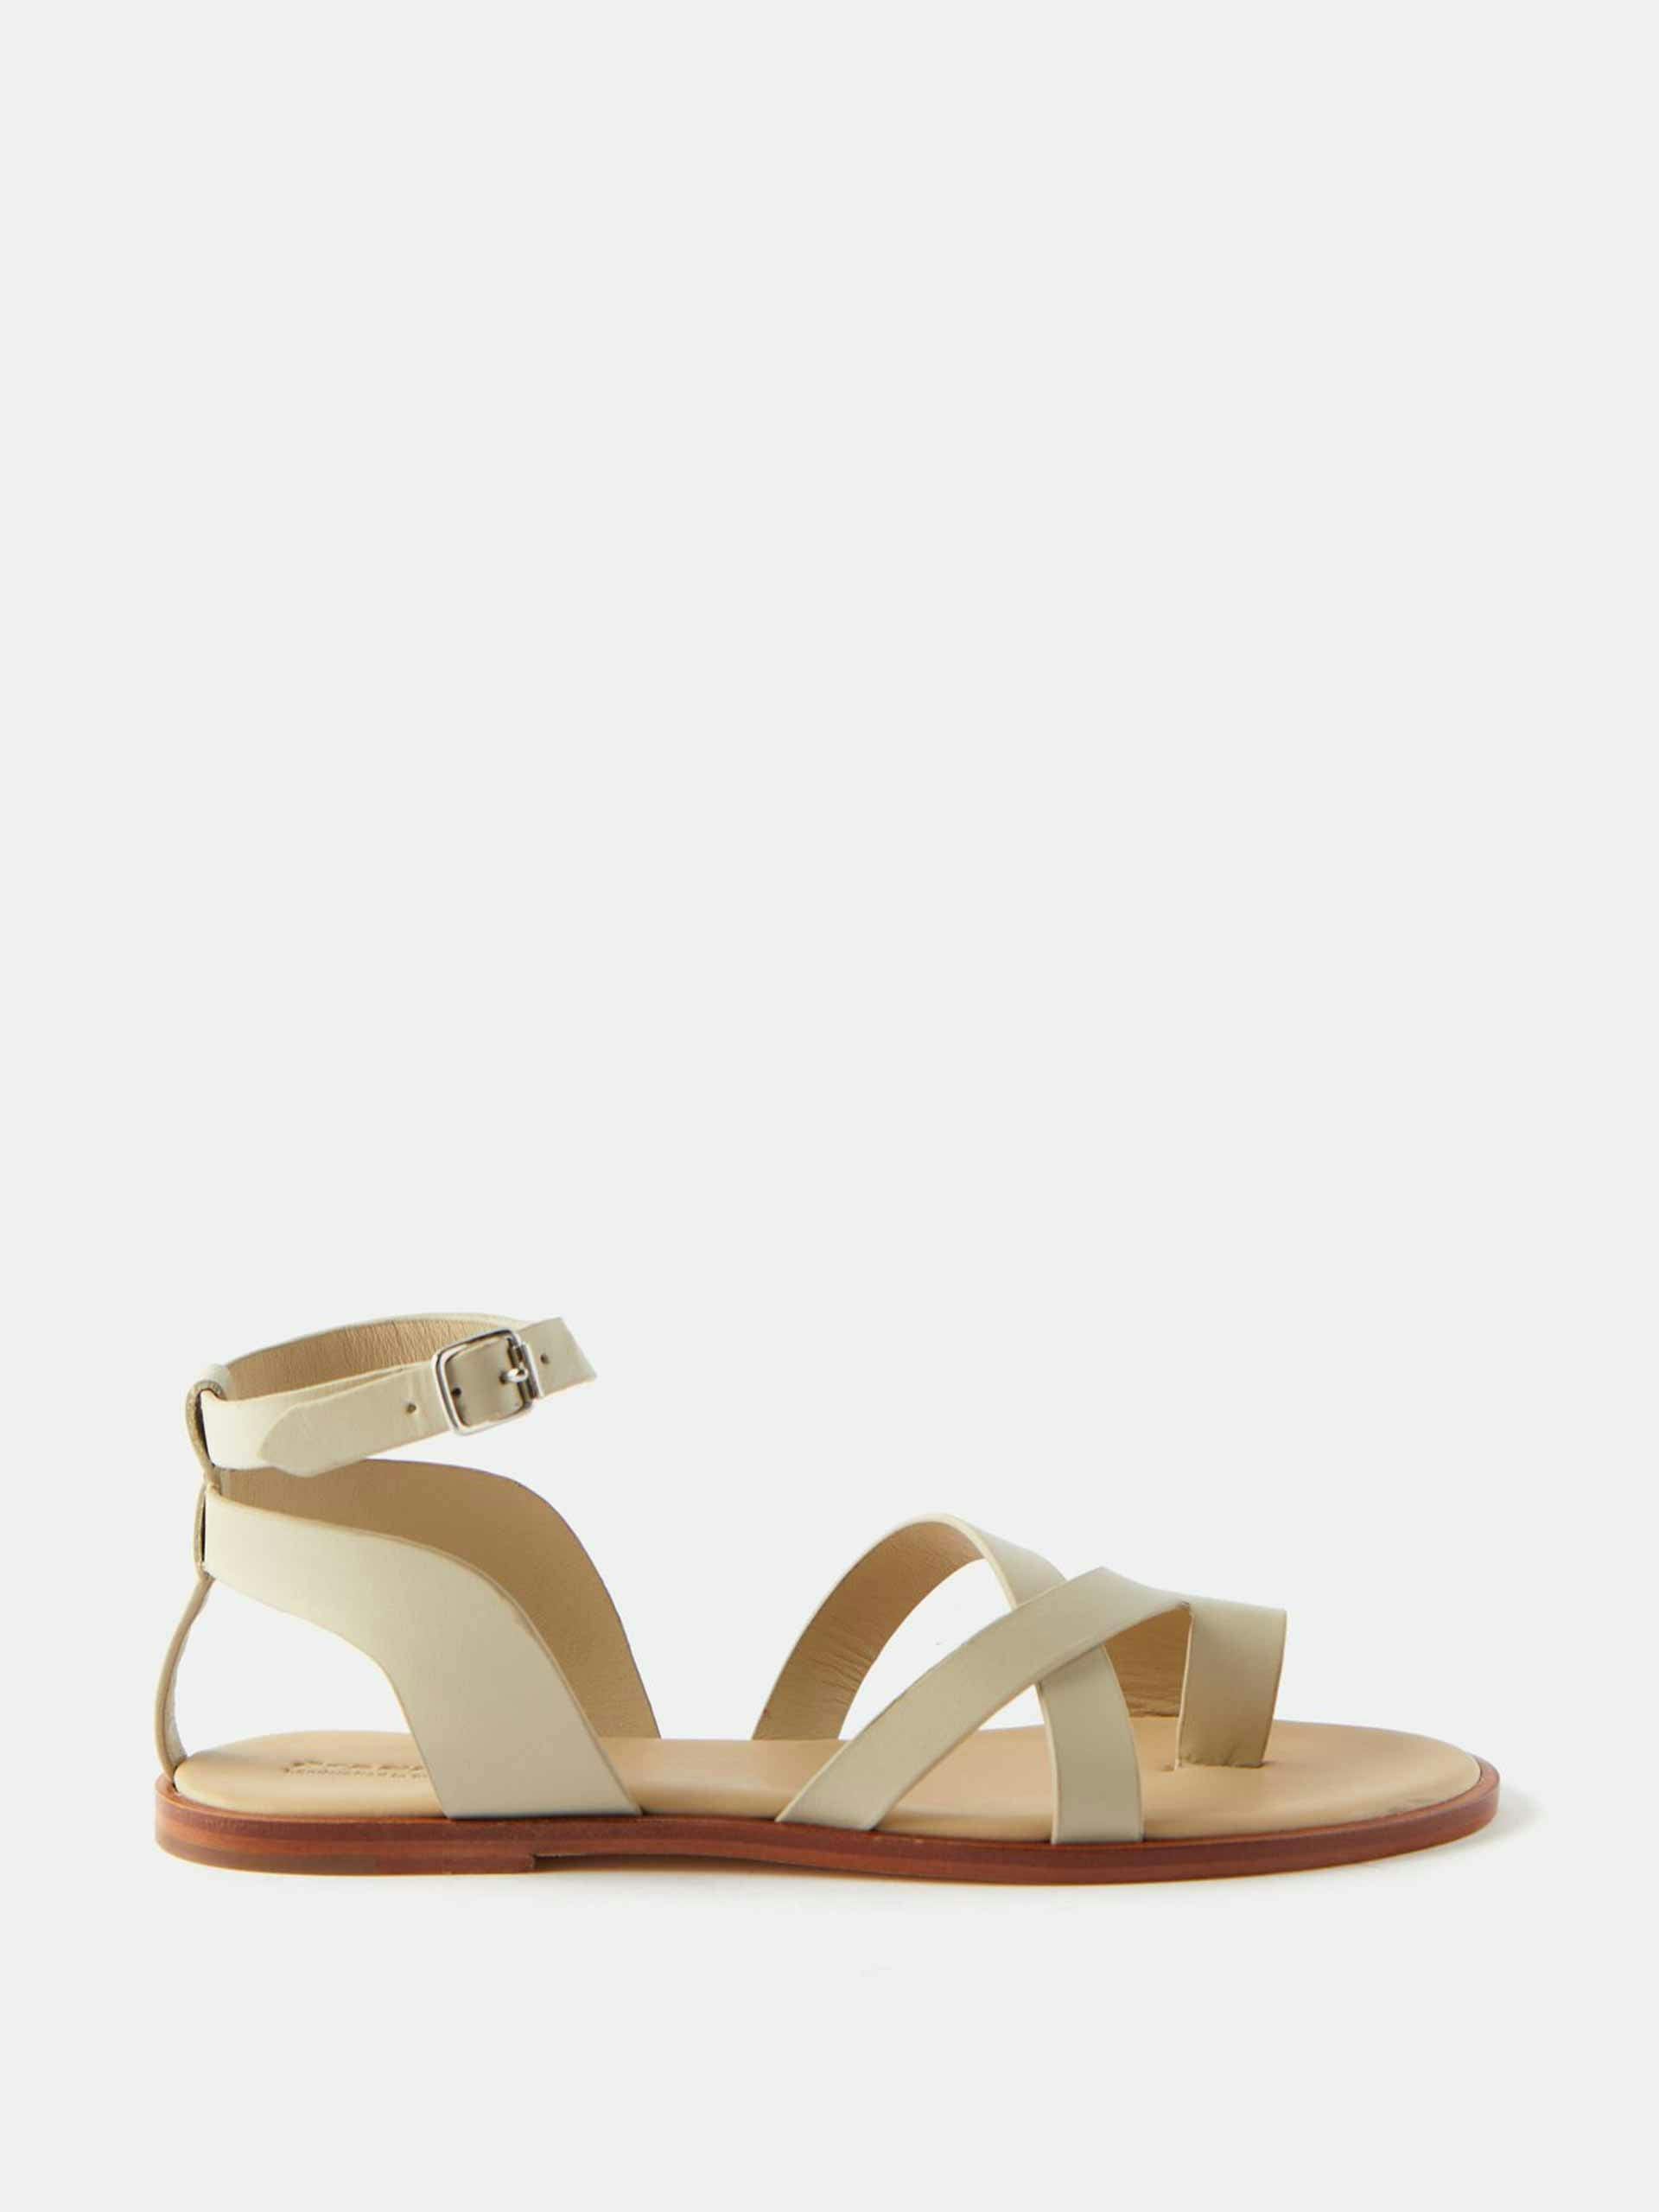 Cream leather strap sandals